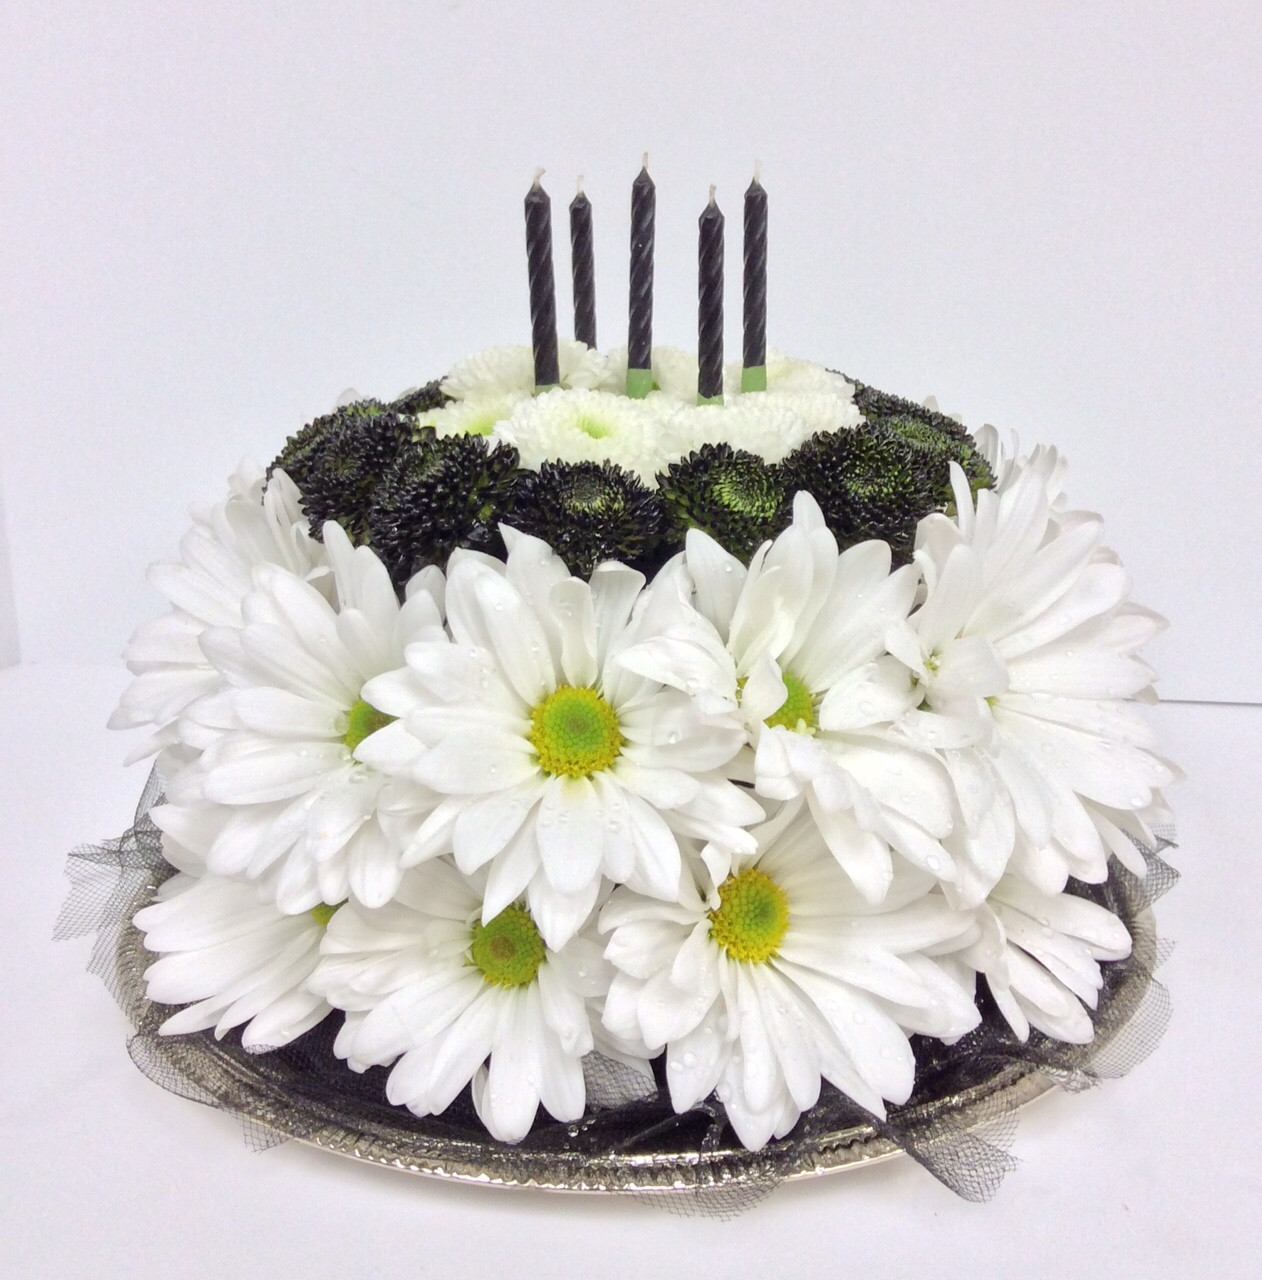 Real Edible Chocolate Birthday Cake - - Send to Draper, UT Today!